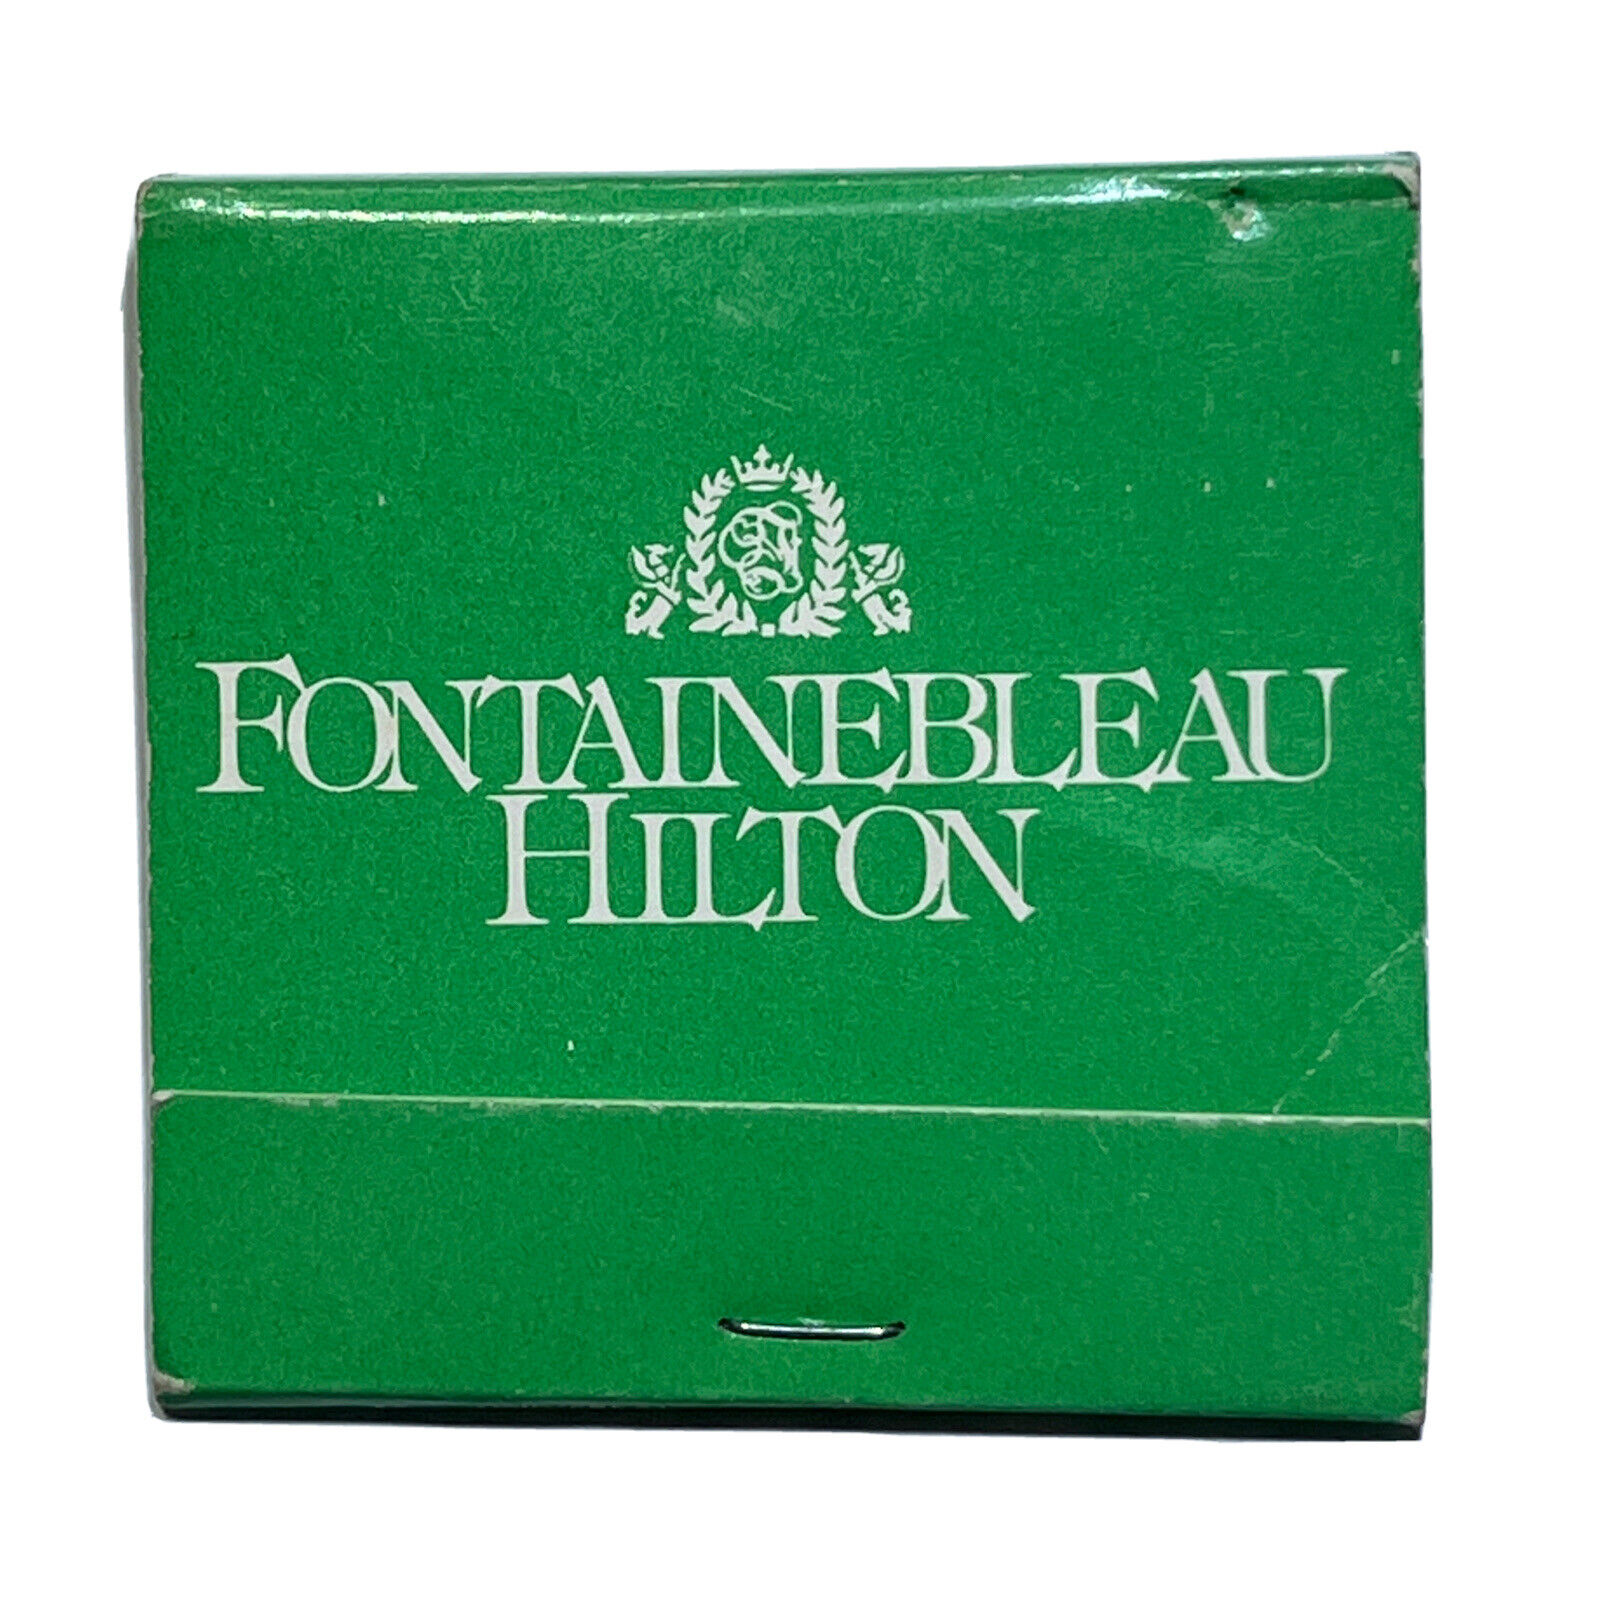 Fontainebleau Hilton Motel Hotel Miami Beach Florida Match Book Matchbox